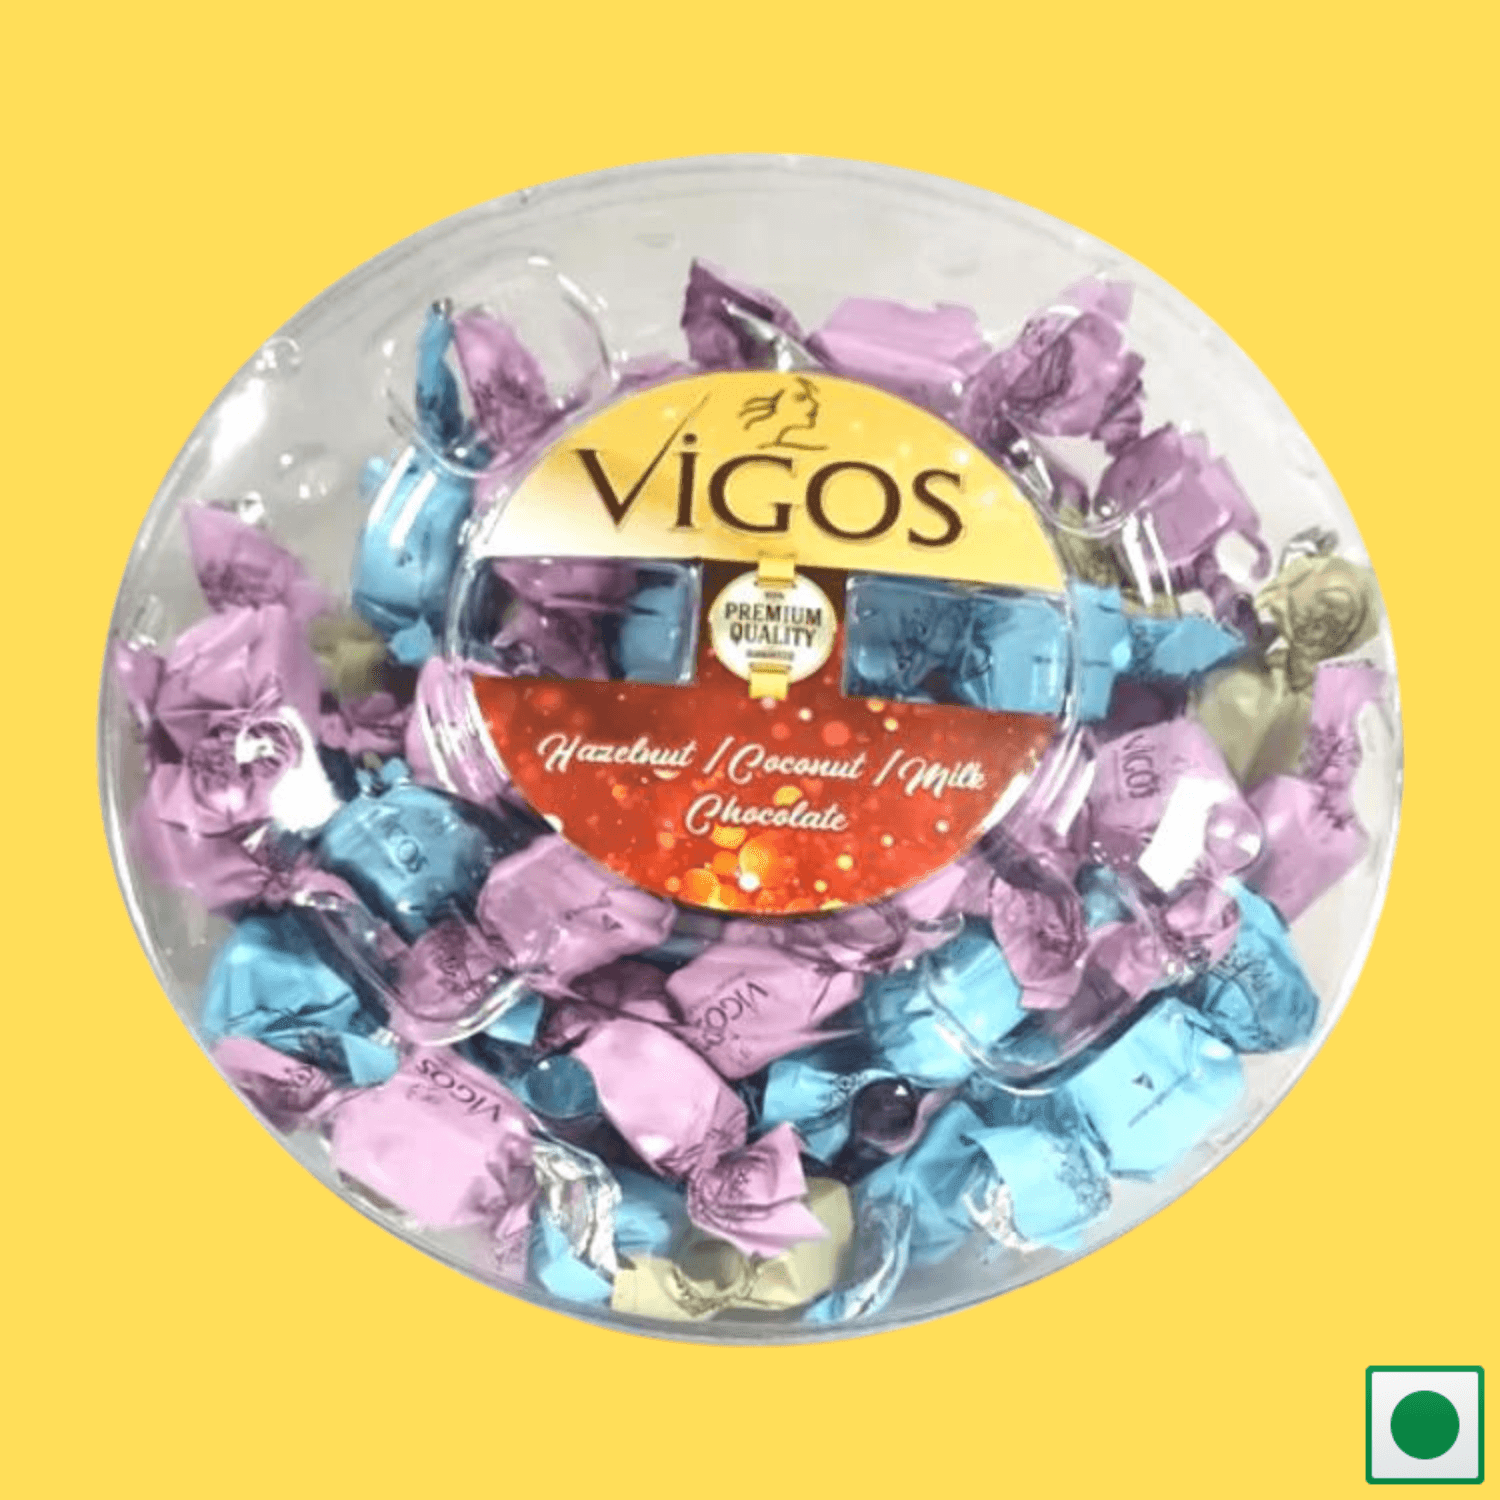 Vigos Chocolate Truffle Assortment Gift Pack Vajra Small, 350g (Imported) - Super 7 Mart